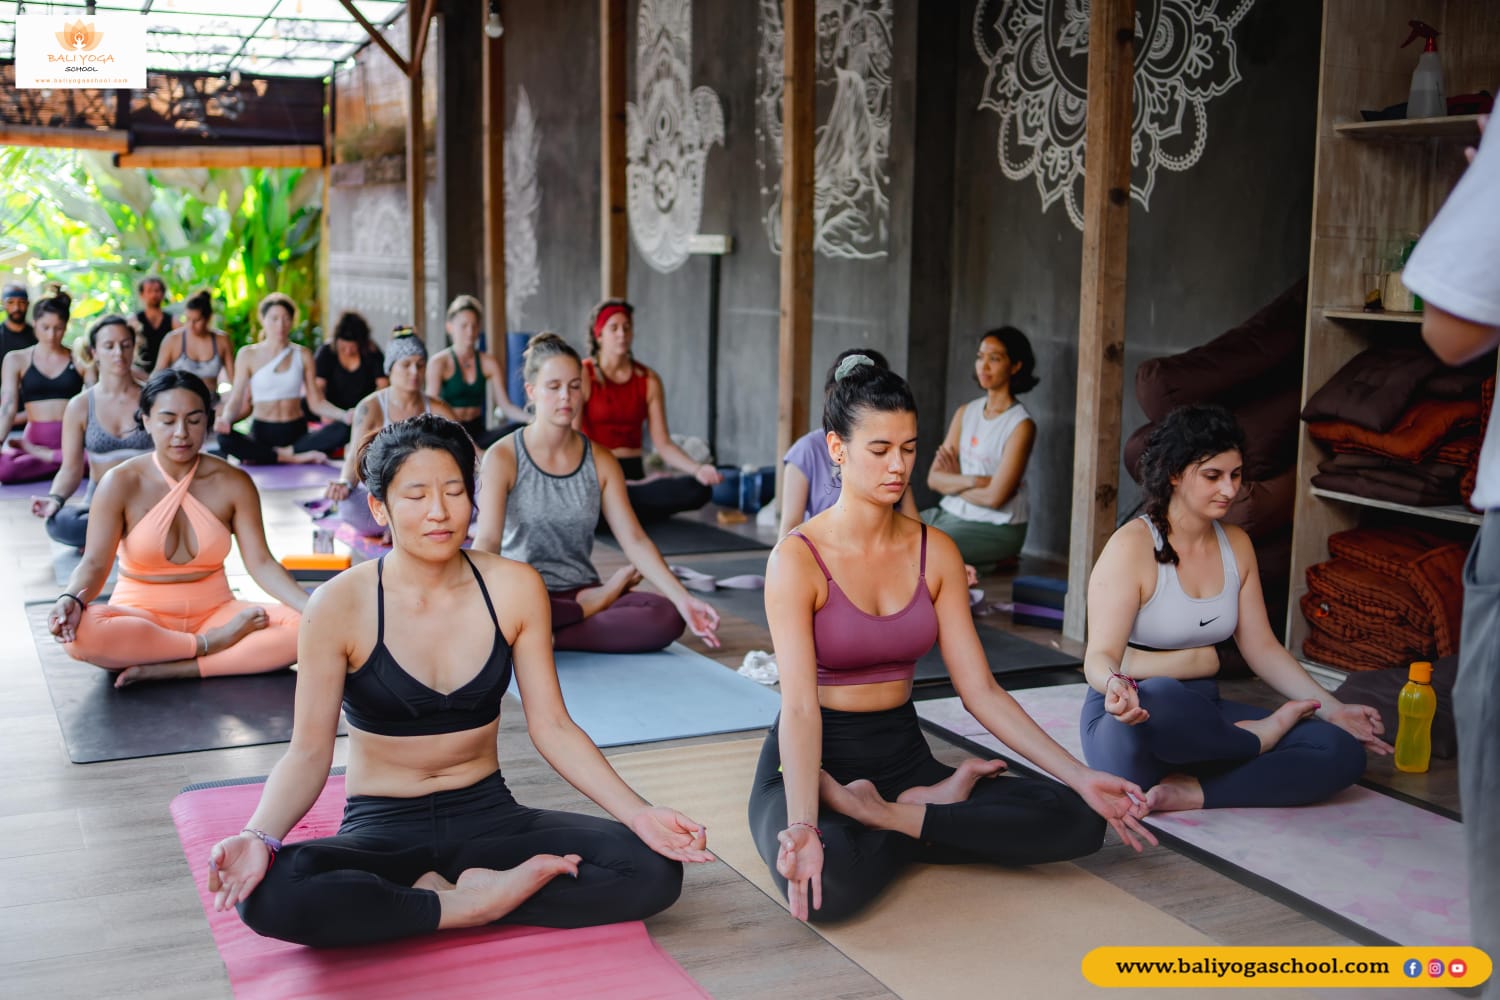 Yoga Alliance Certified 3 Months 200 Hour Online Yoga Teacher Training Course